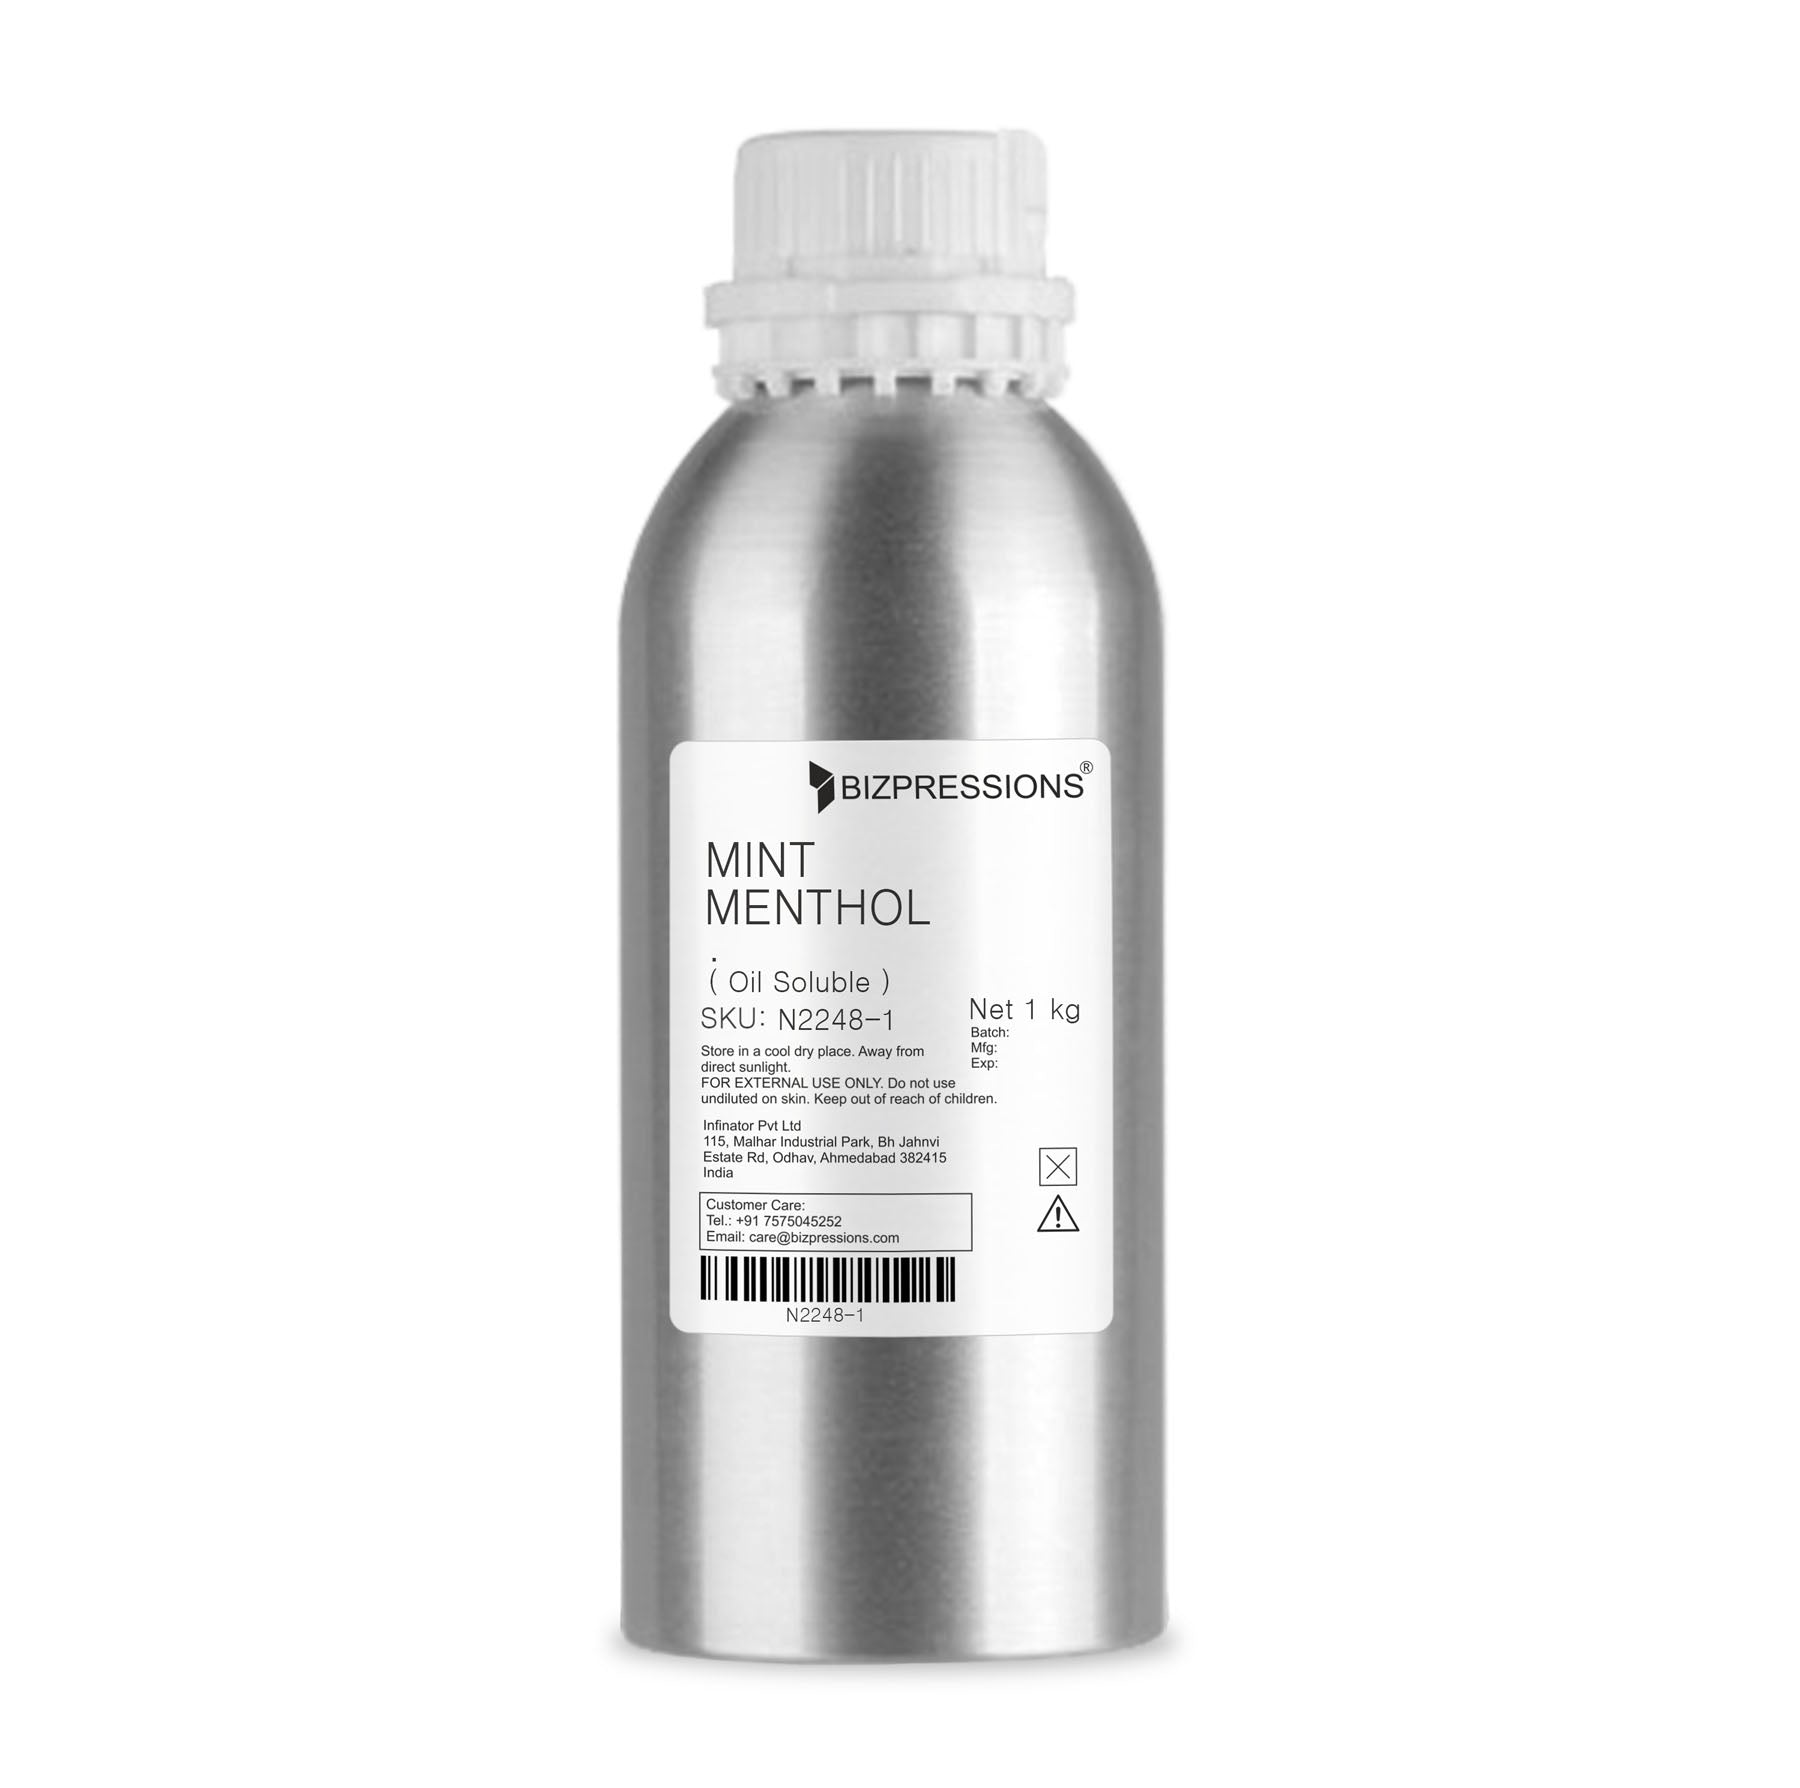 MINT MENTHOL - Fragrance ( Oil Soluble ) - 1 kg